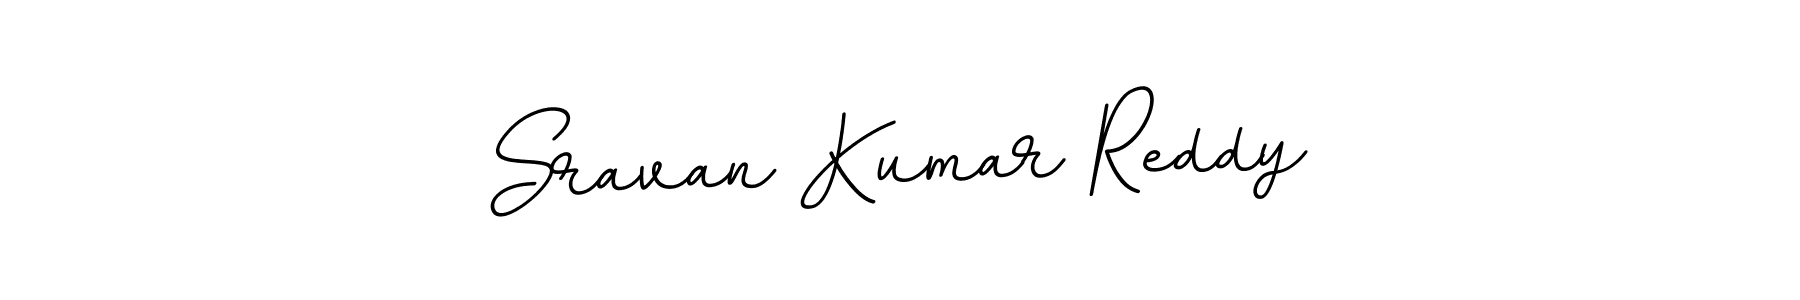 How to Draw Sravan Kumar Reddy signature style? BallpointsItalic-DORy9 is a latest design signature styles for name Sravan Kumar Reddy. Sravan Kumar Reddy signature style 11 images and pictures png